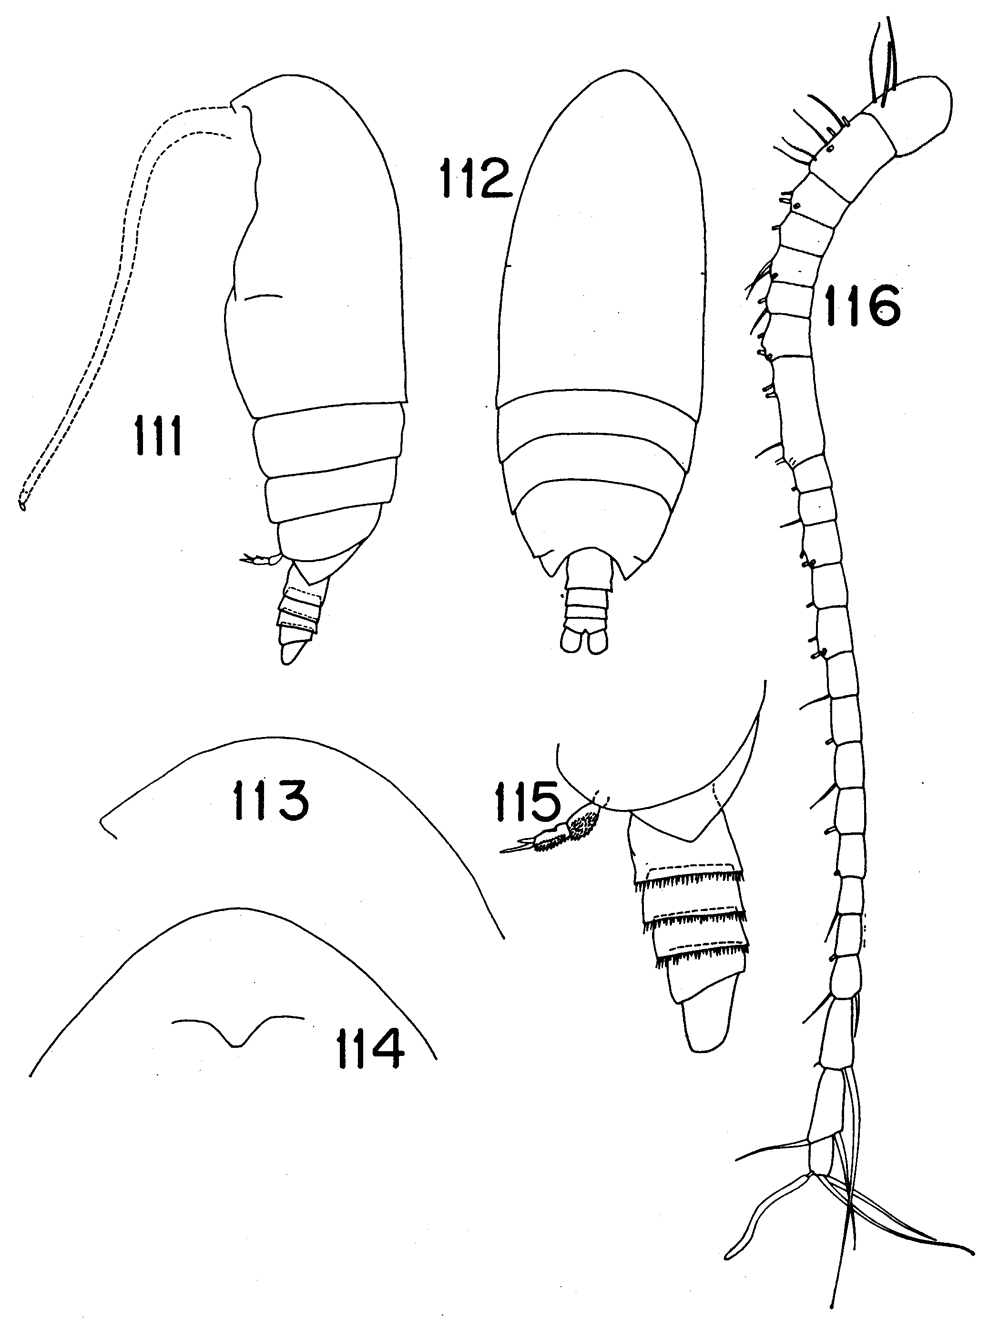 Species Byrathis macrocephalon - Plate 4 of morphological figures